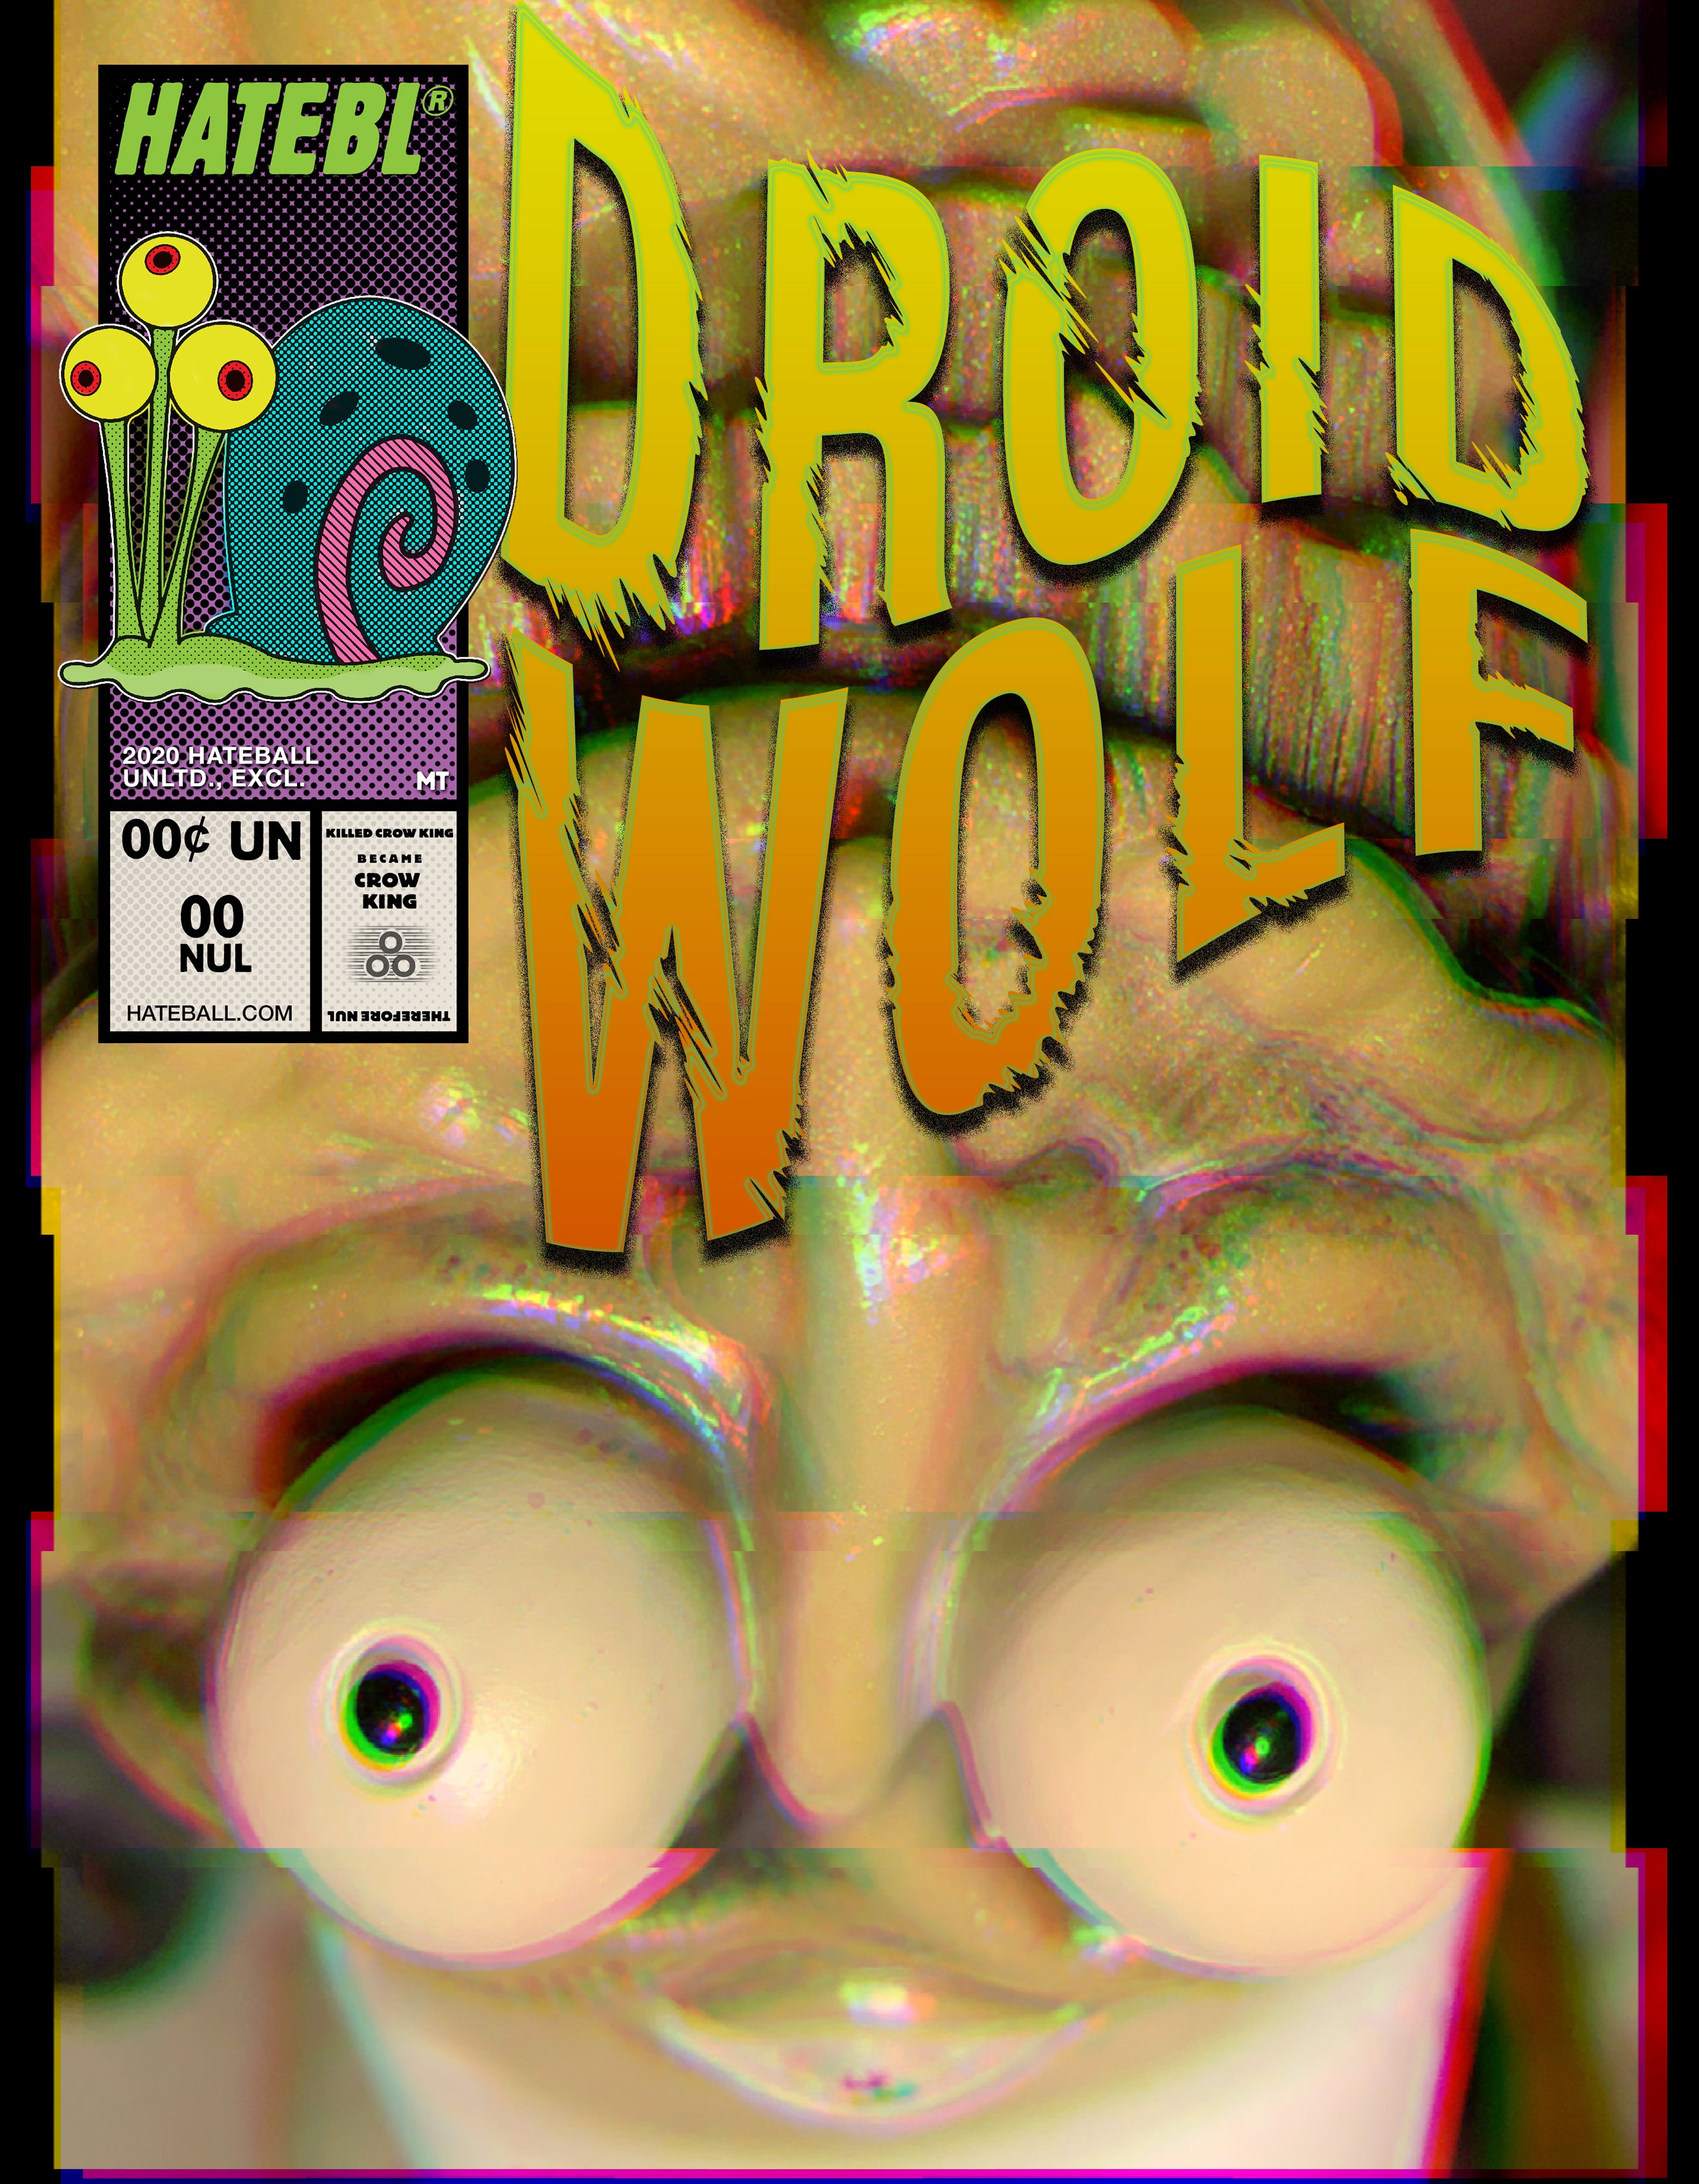 Zinewolf [Droid Wolf]